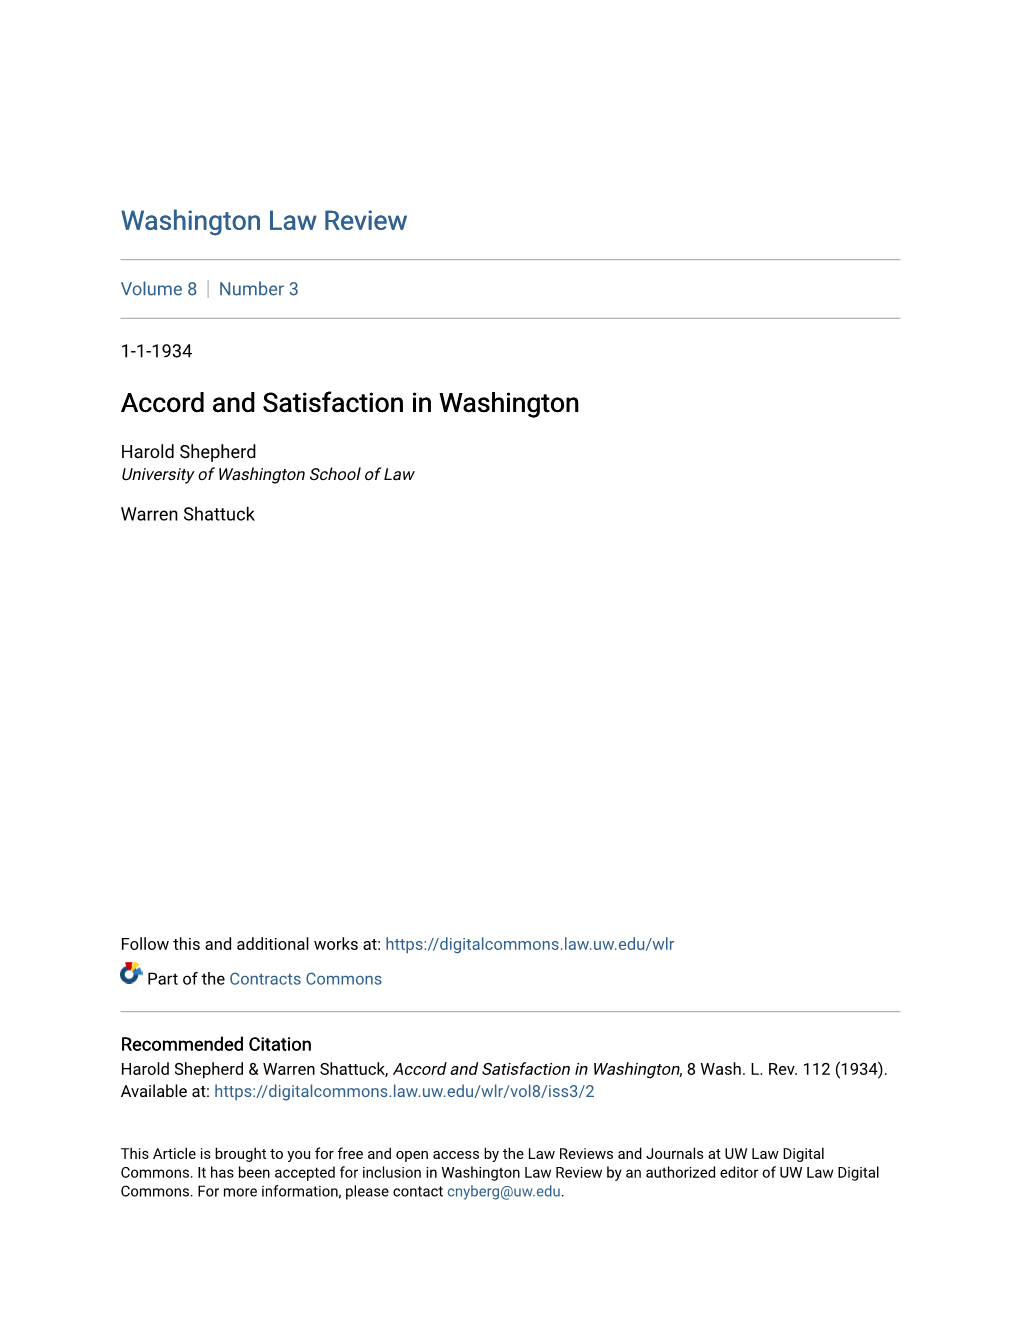 Accord and Satisfaction in Washington